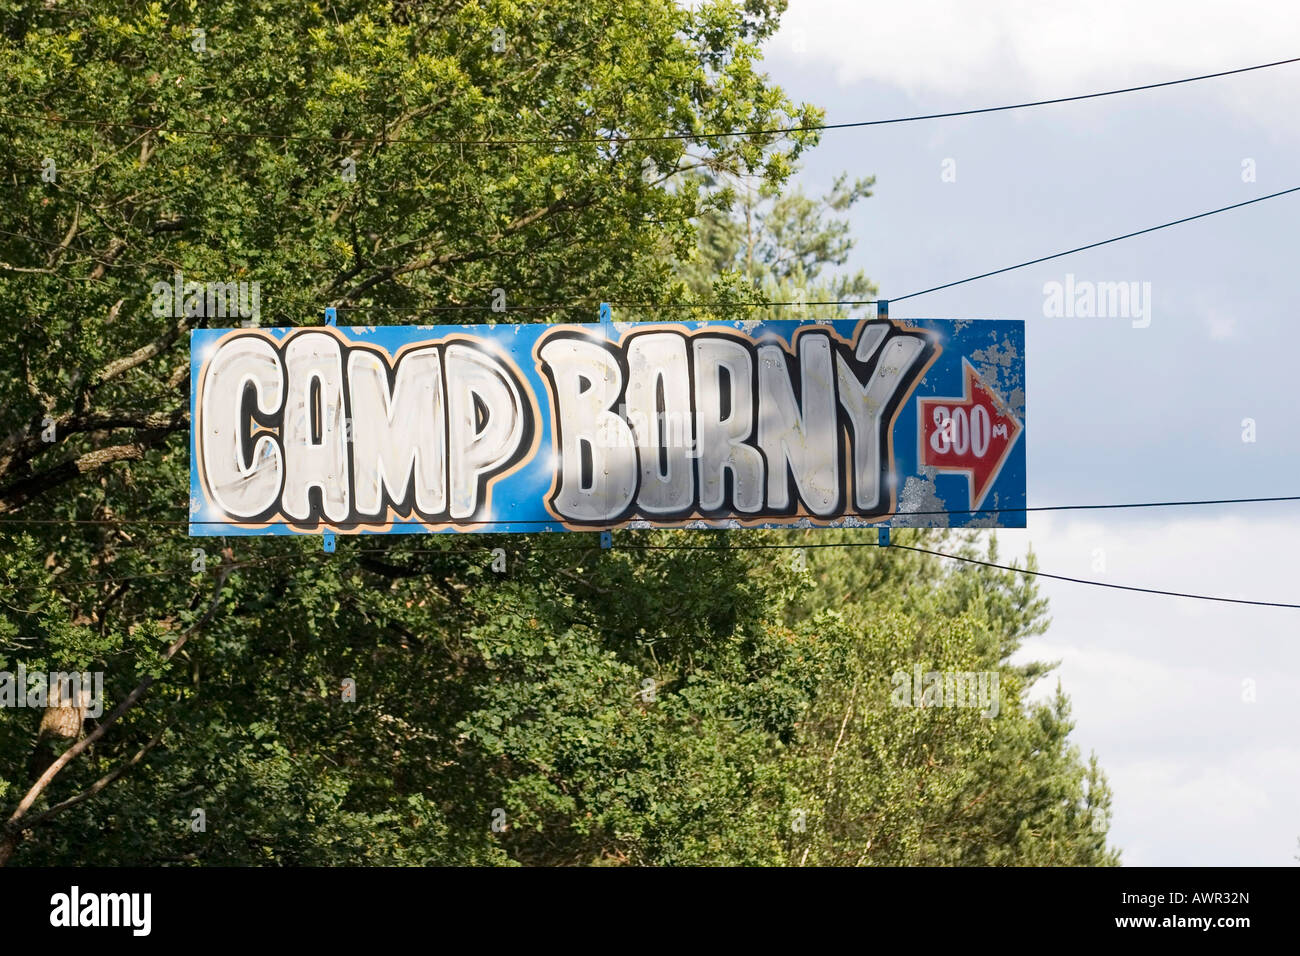 Camping site Borny, Stare Splavy, Czechia Stock Photo